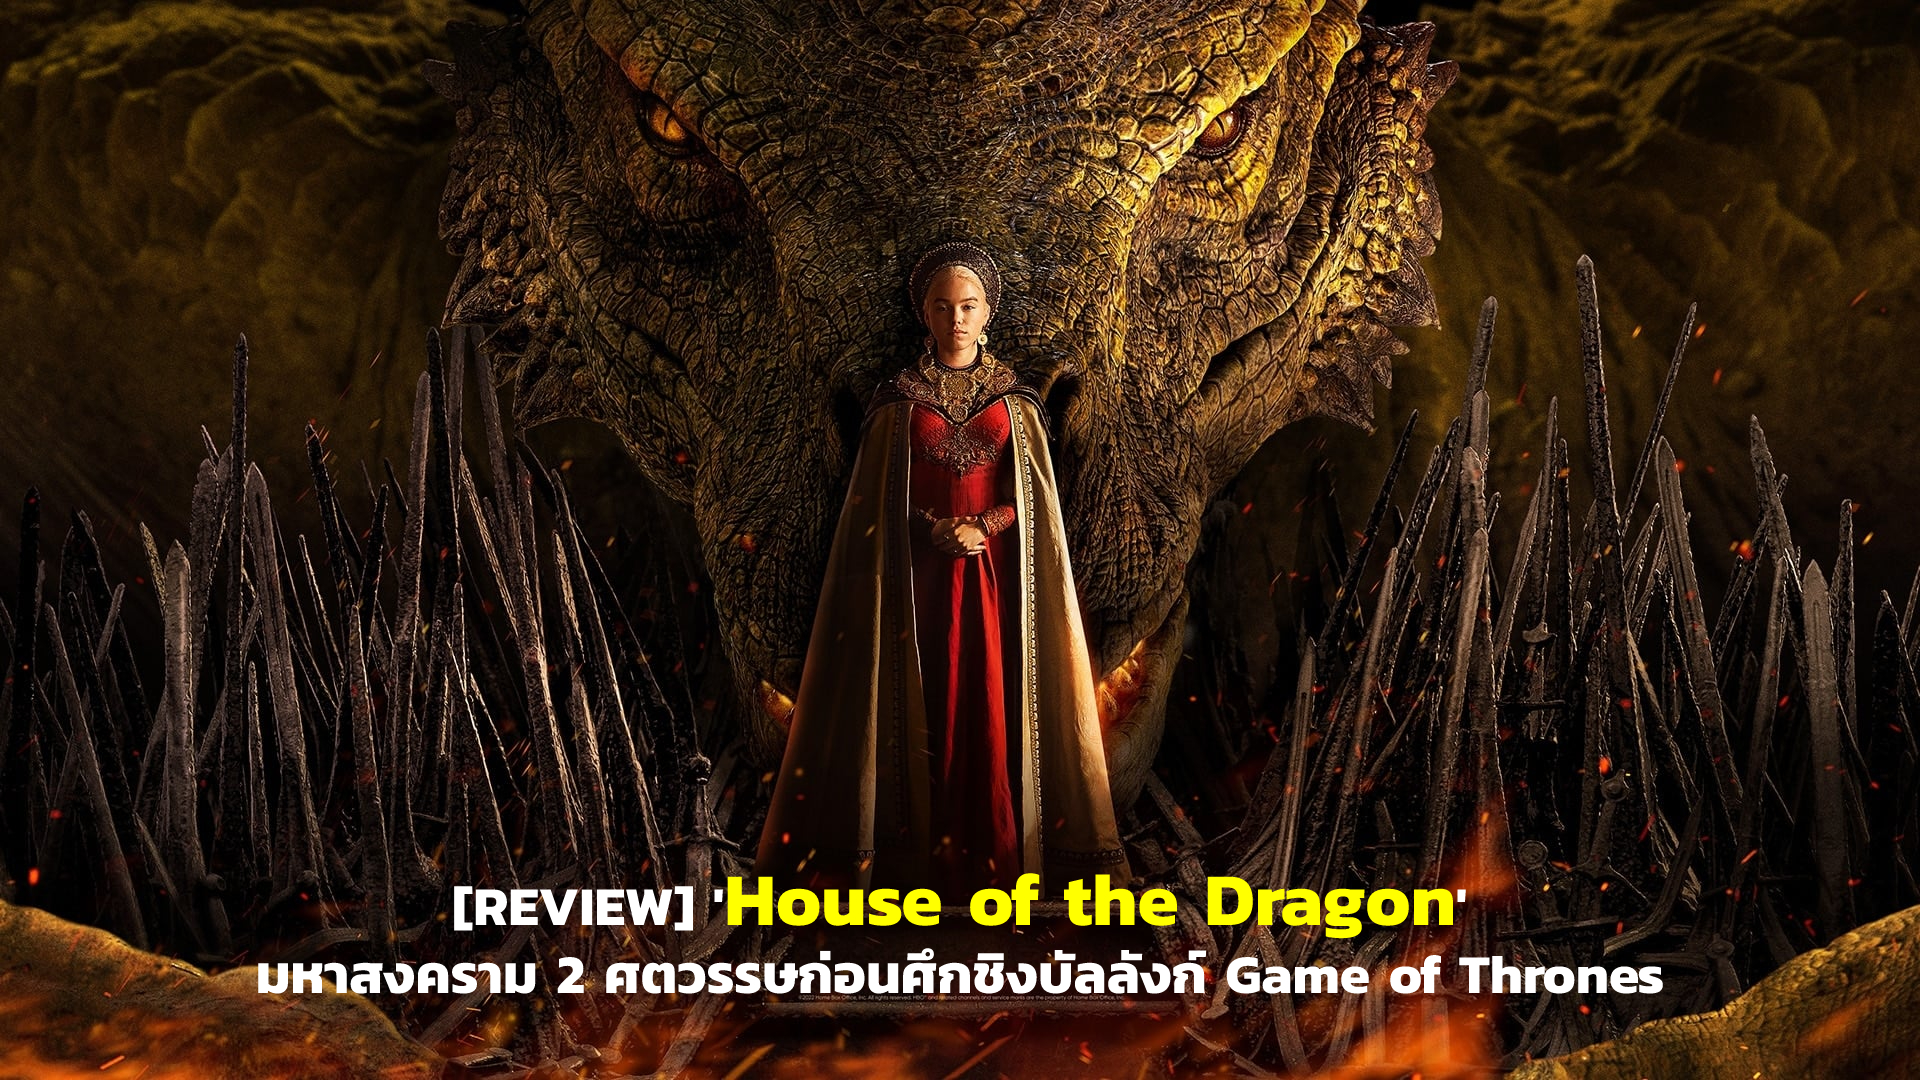 [REVIEW] ‘House of the Dragon ’ มหาสงคราม 2 ศตวรรษก่อนศึกชิงบัลลังก์ Game of Thrones | GOSSIP GUN